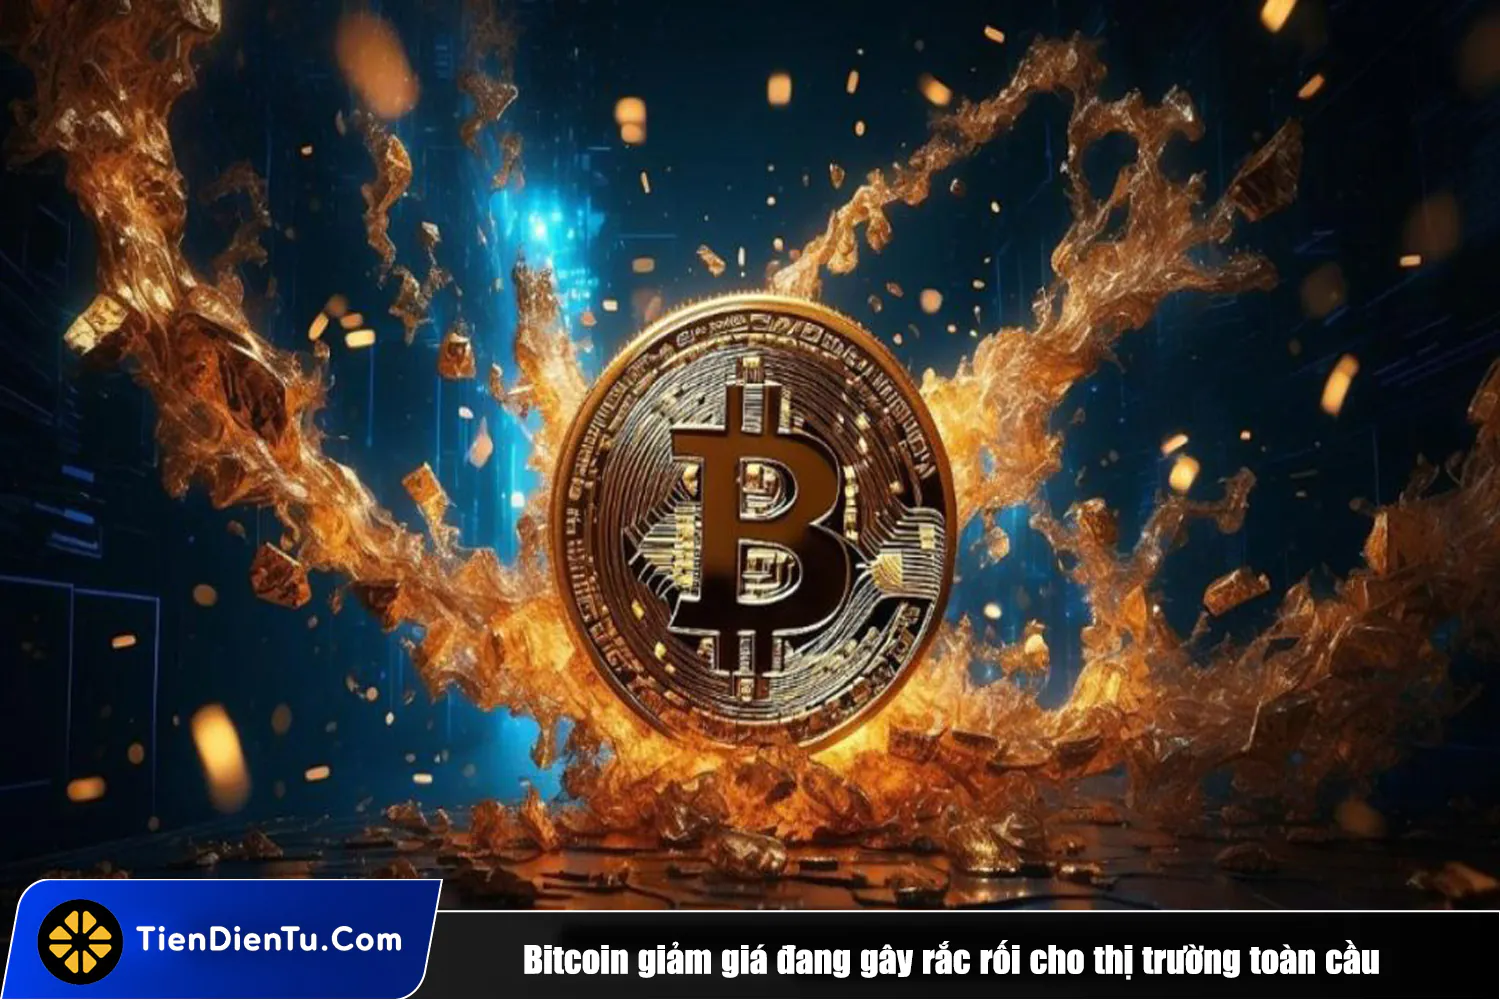 Tiendientu bitcoin gay rac roi toan cau